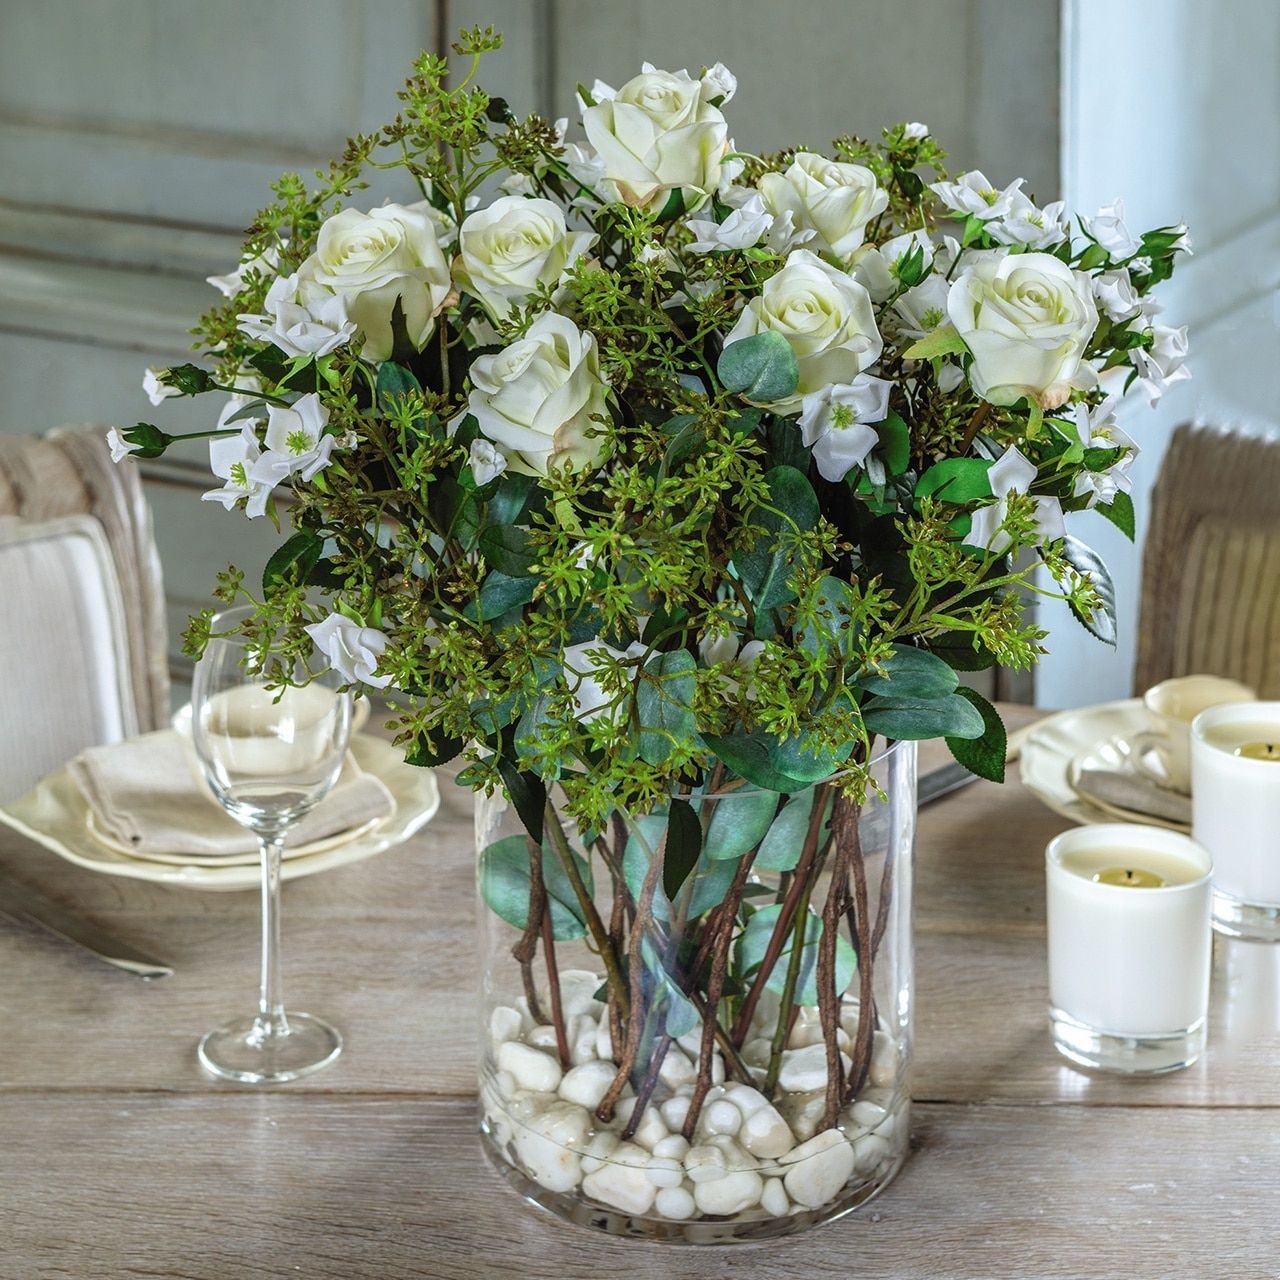 9,866 Flower Vase Outline Images, Stock Photos & Vectors | Shutterstock